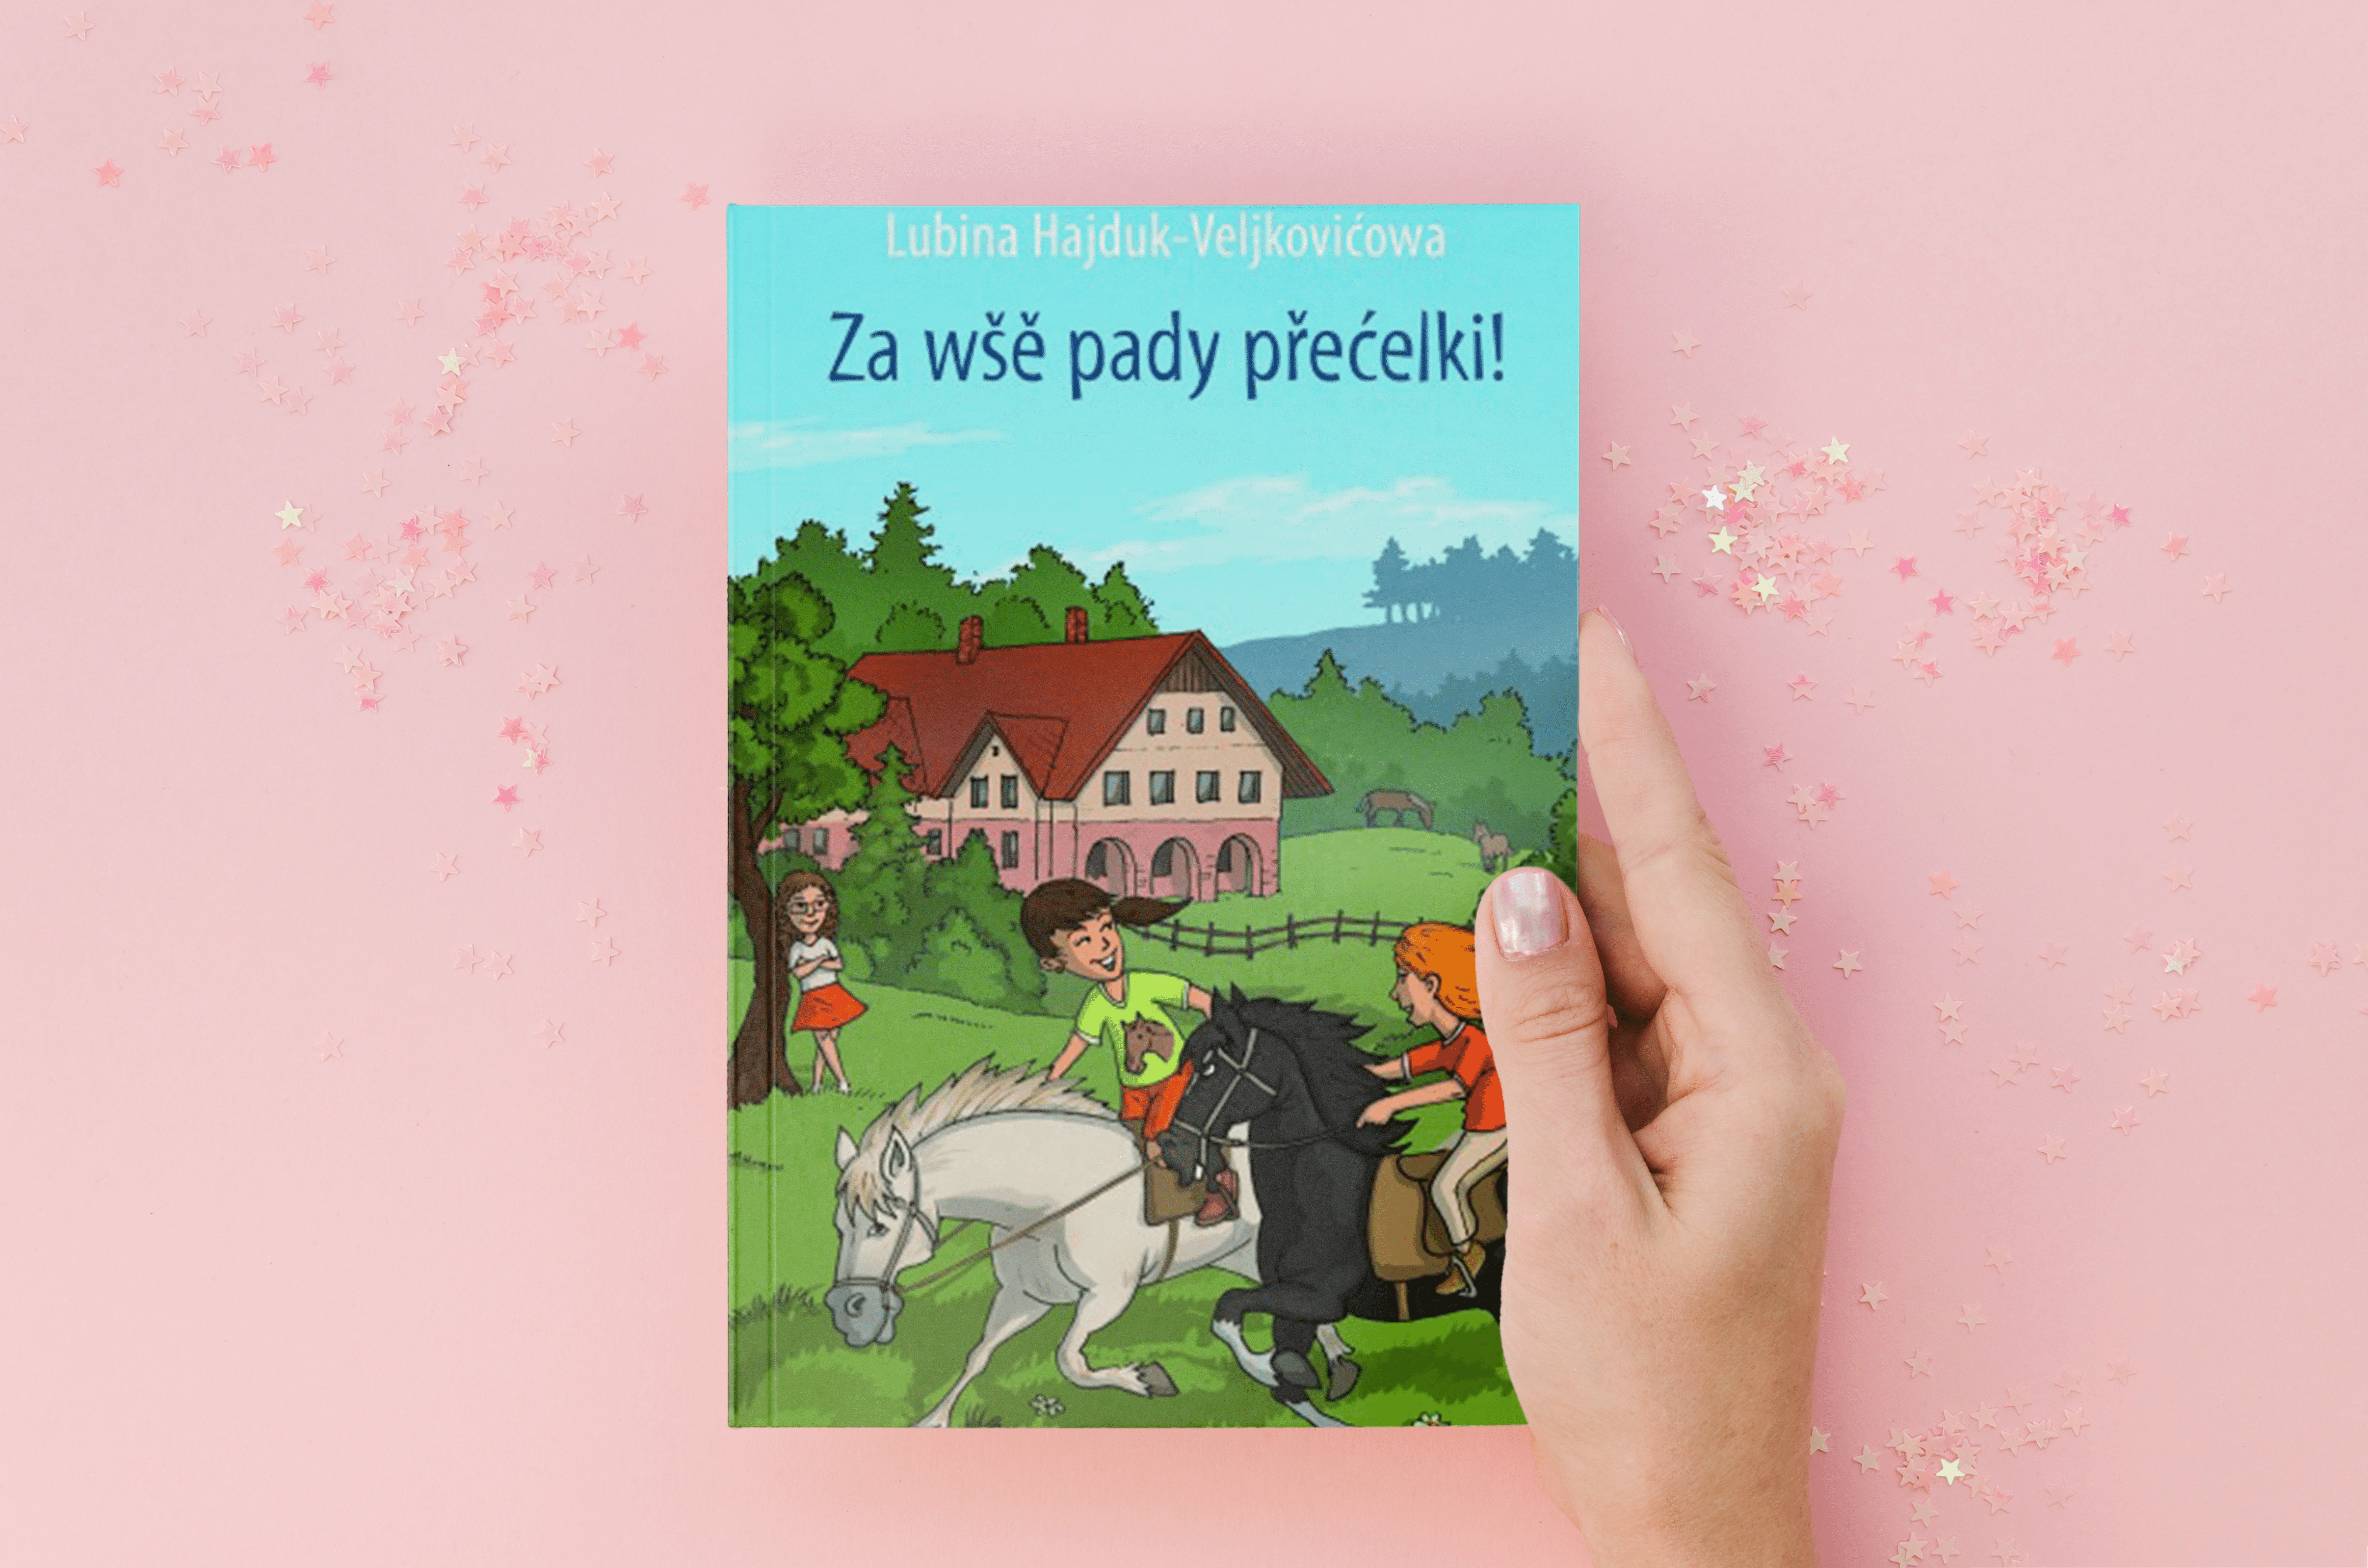 Horse Children's Book by Lubina Hajduk